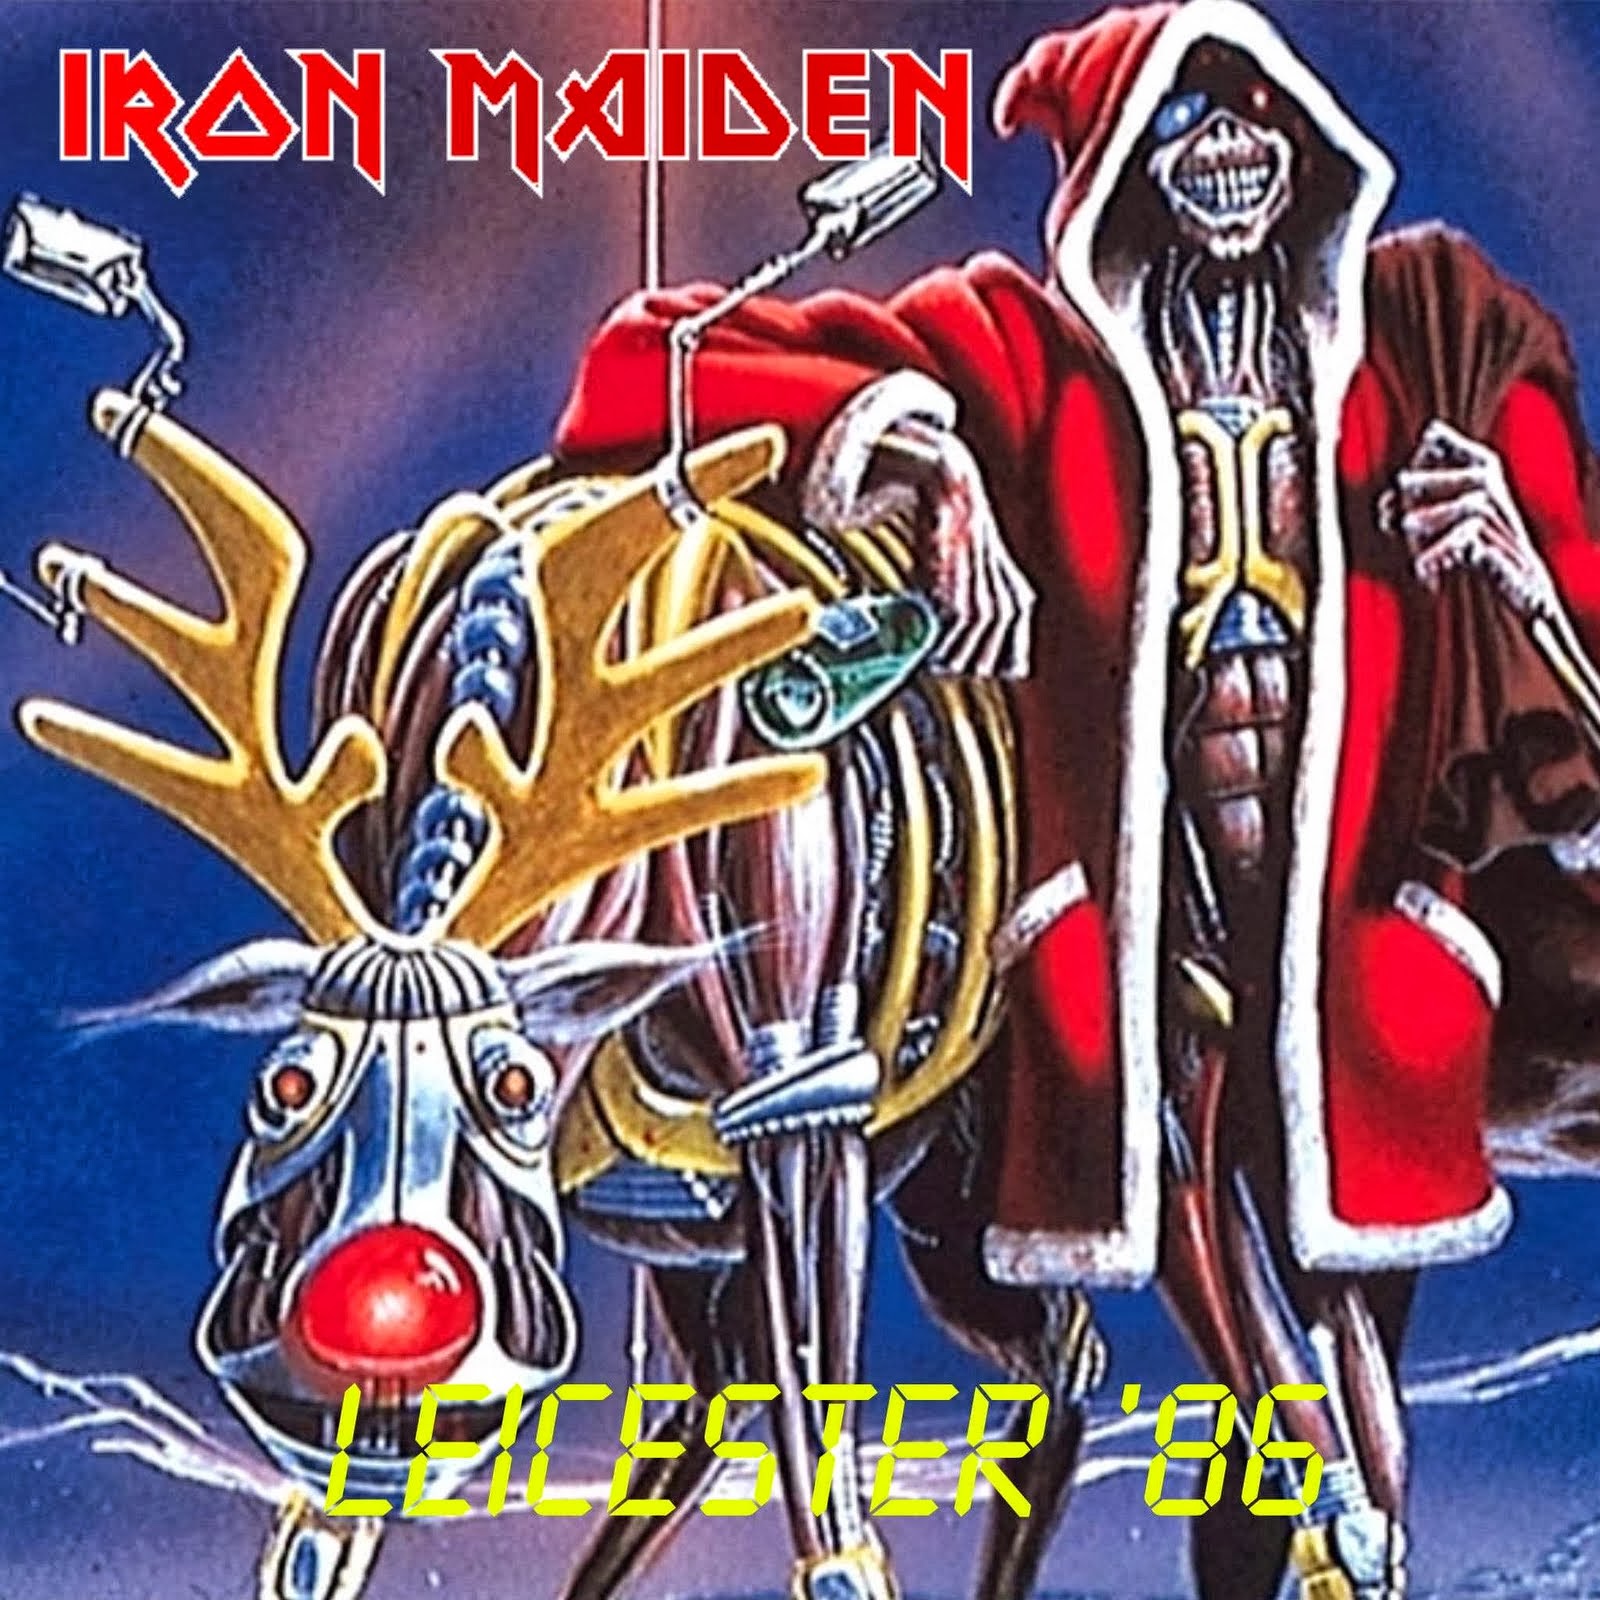 iron maiden iron maiden mp3 free download